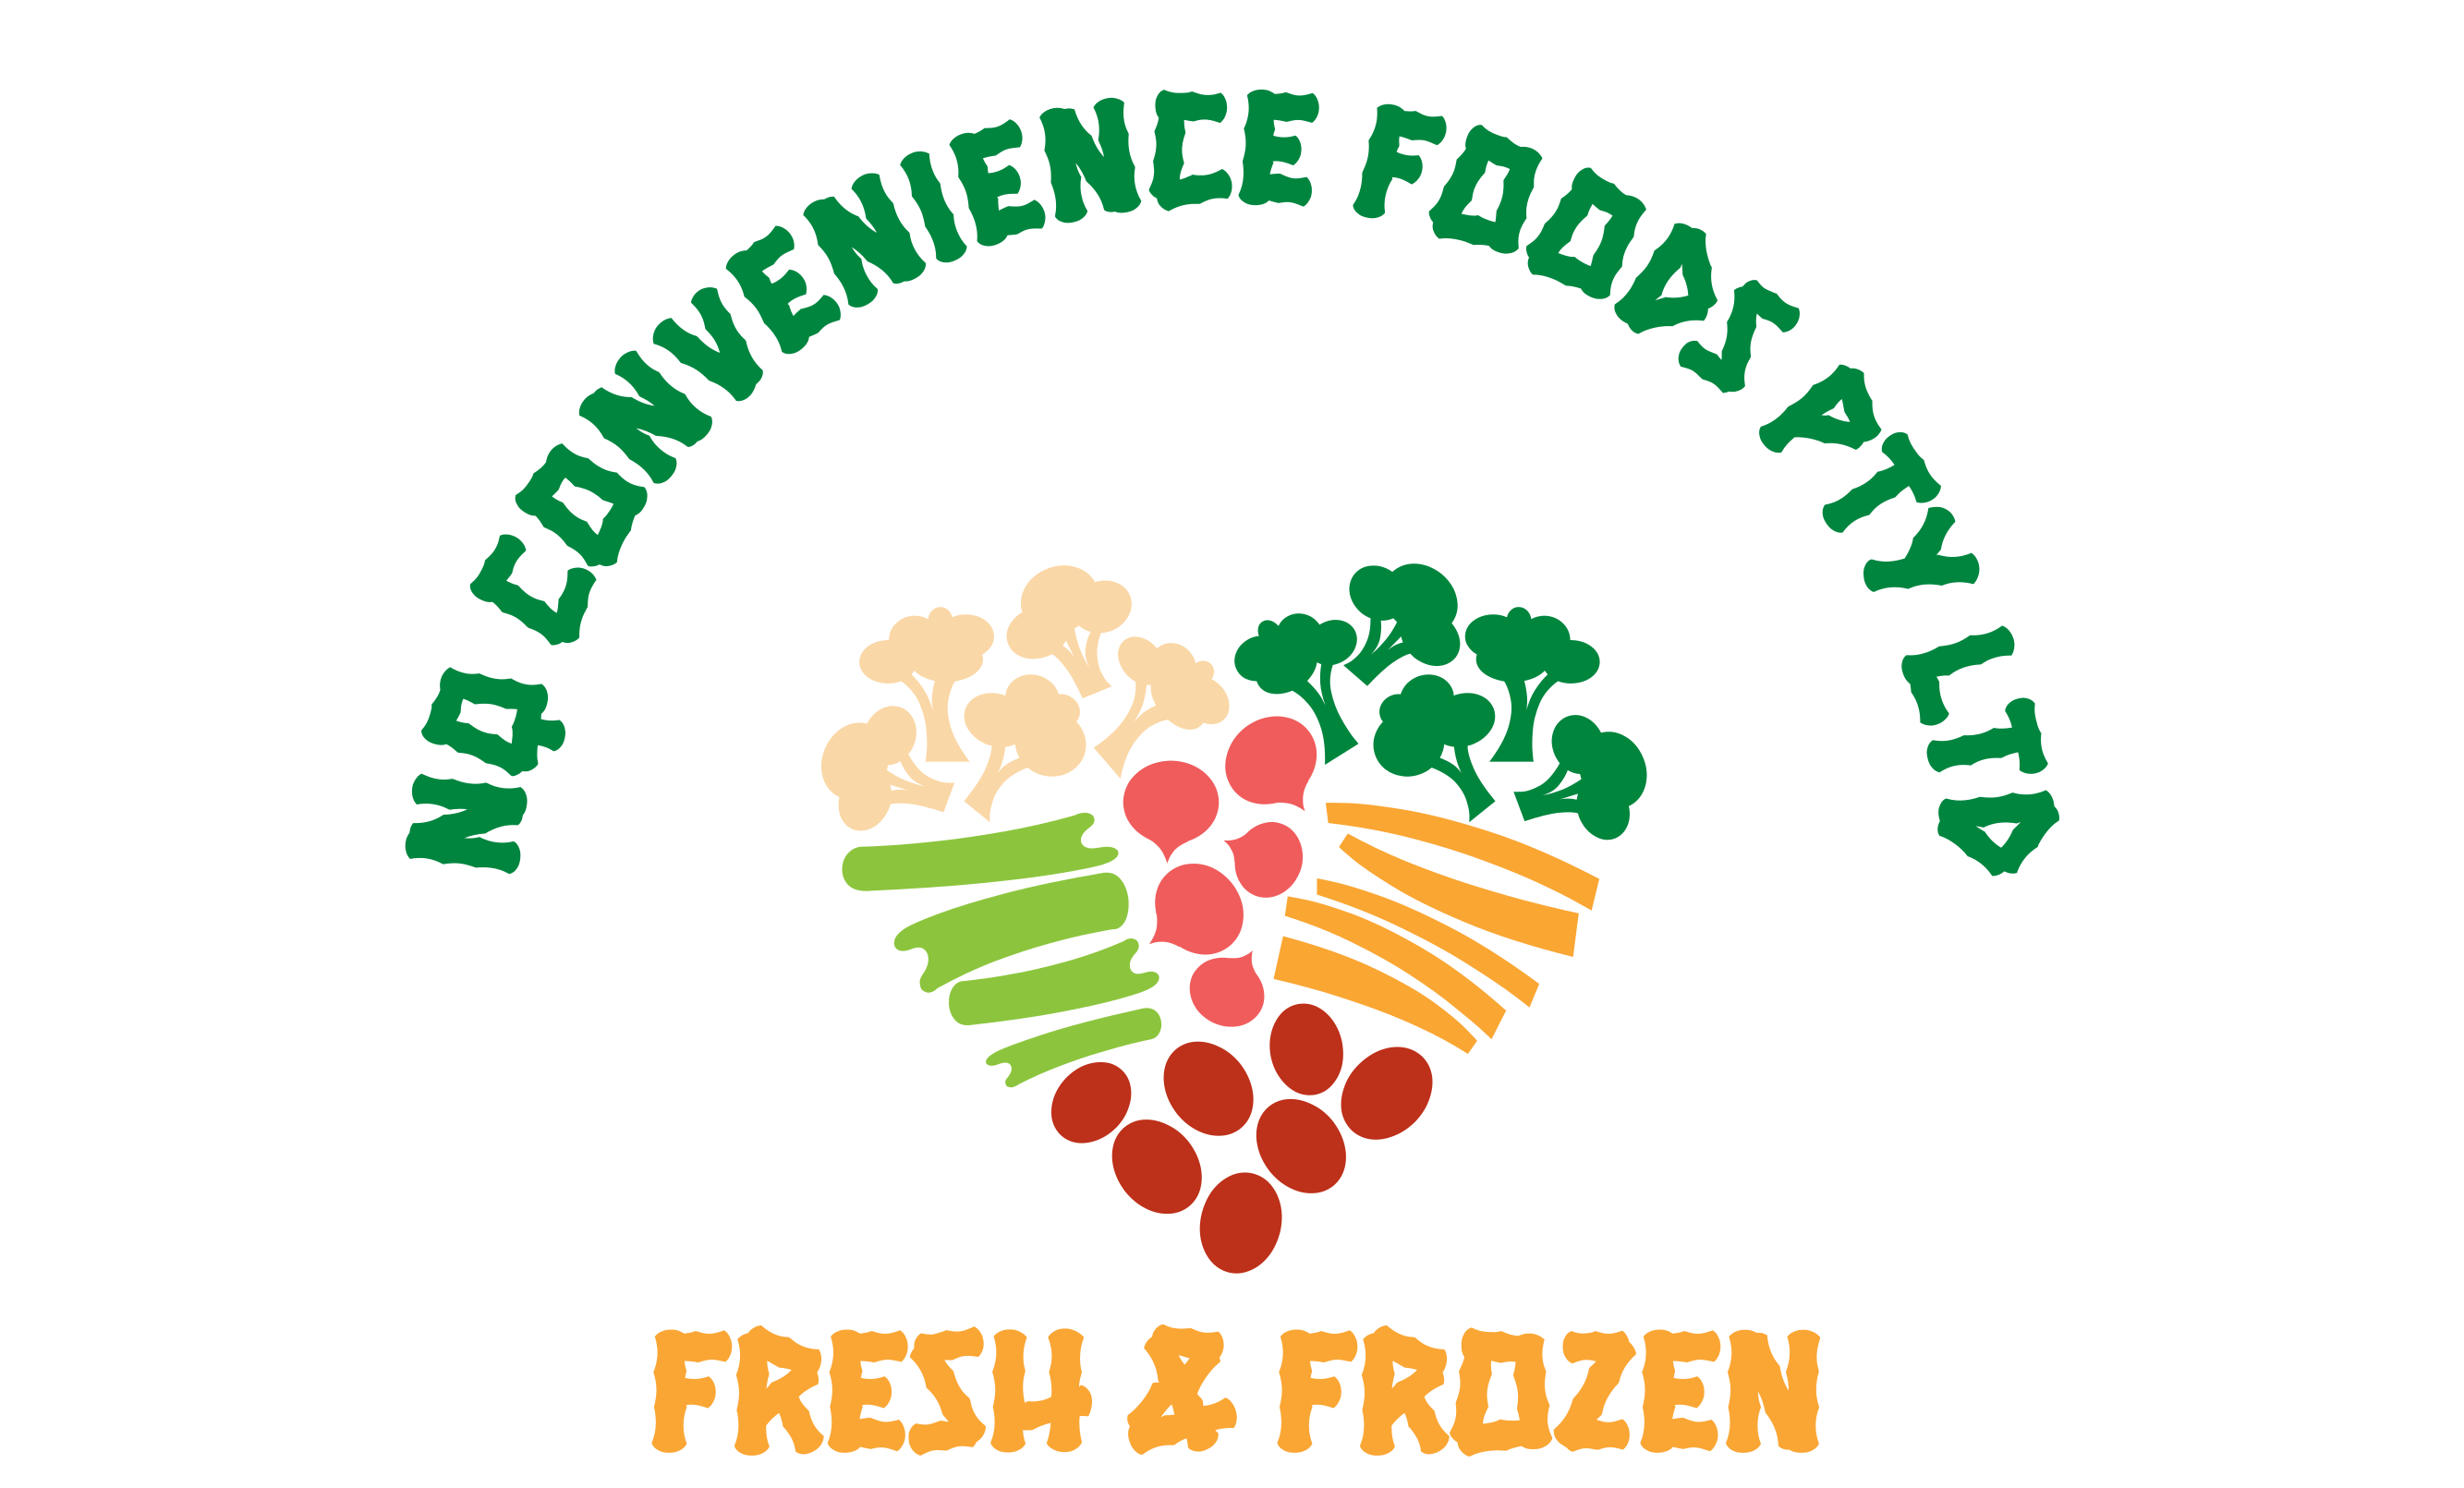 North Queensland Convenience Foods